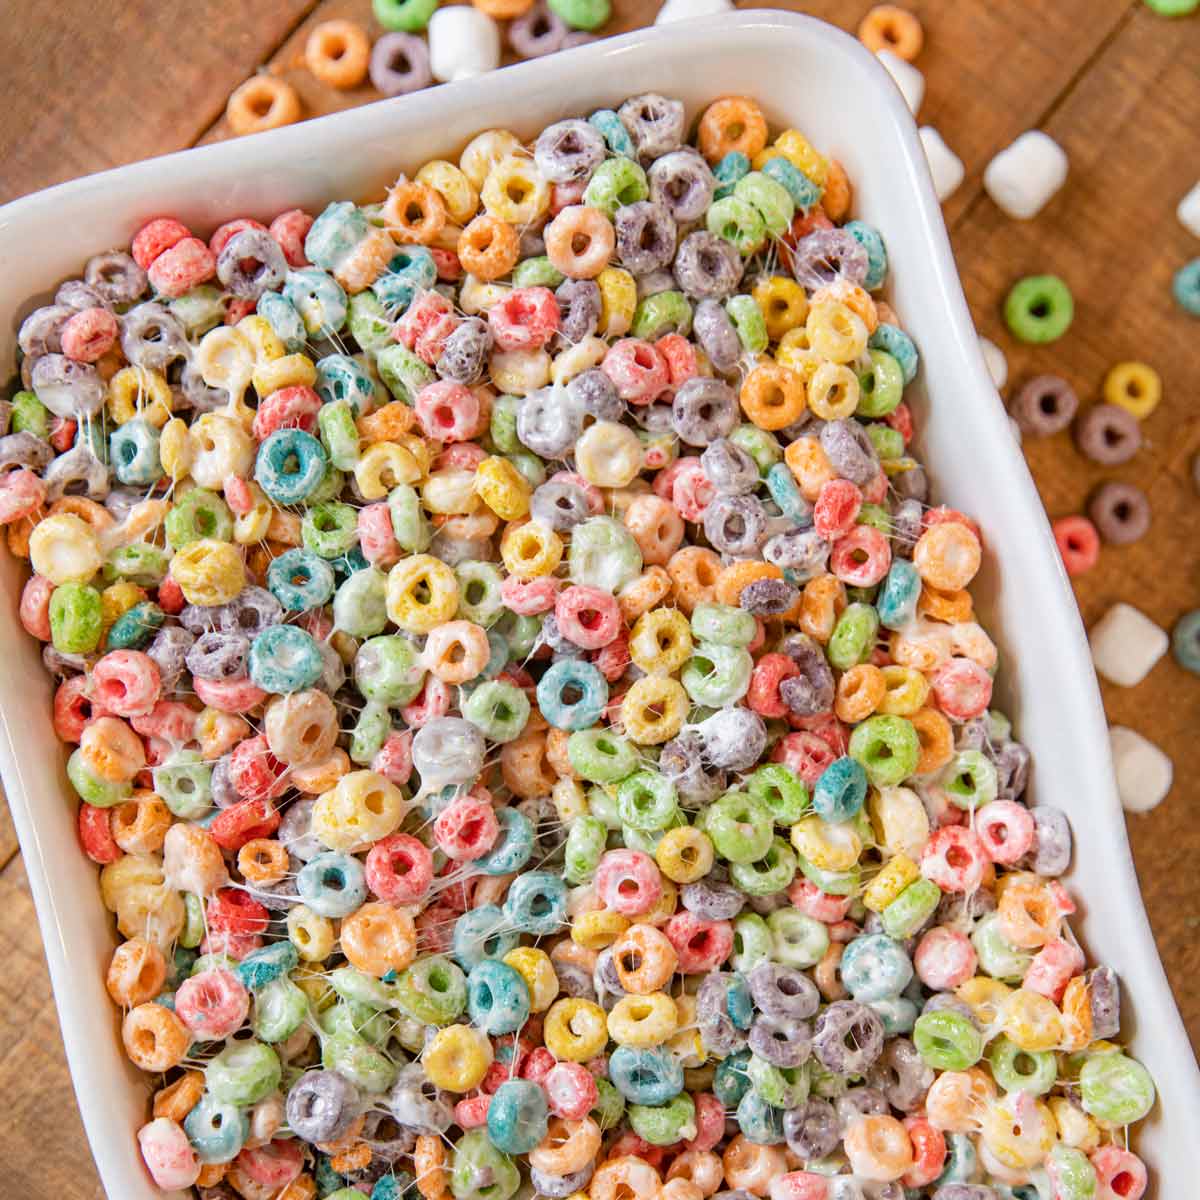 Froot Loops vs. Healthy Cereals